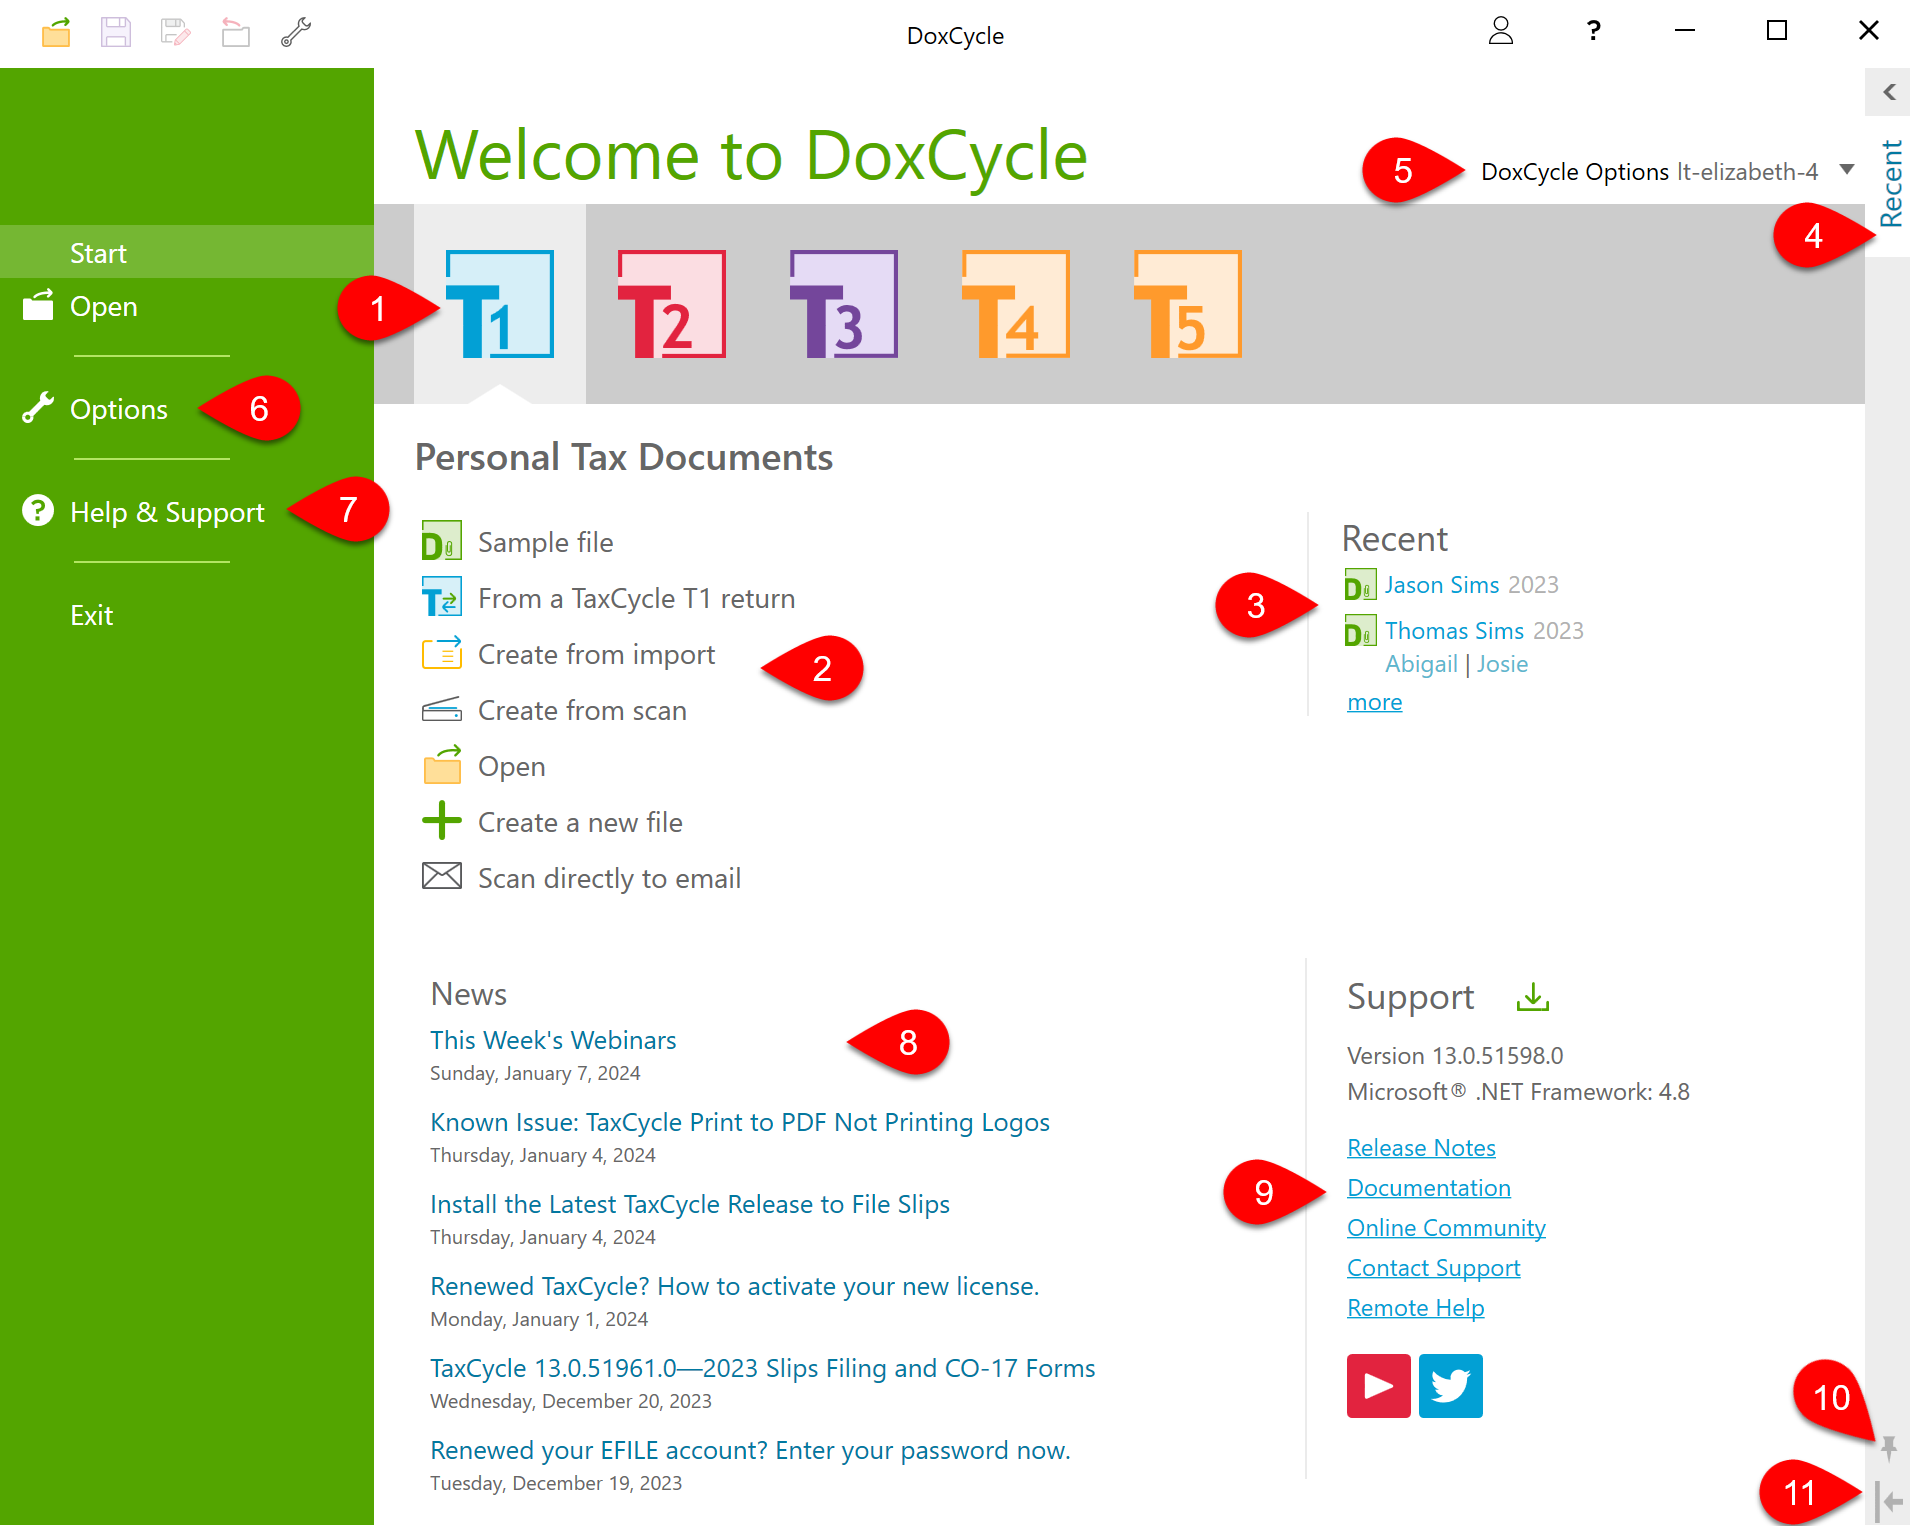 Screen Capture: DoxCycle Start Screen